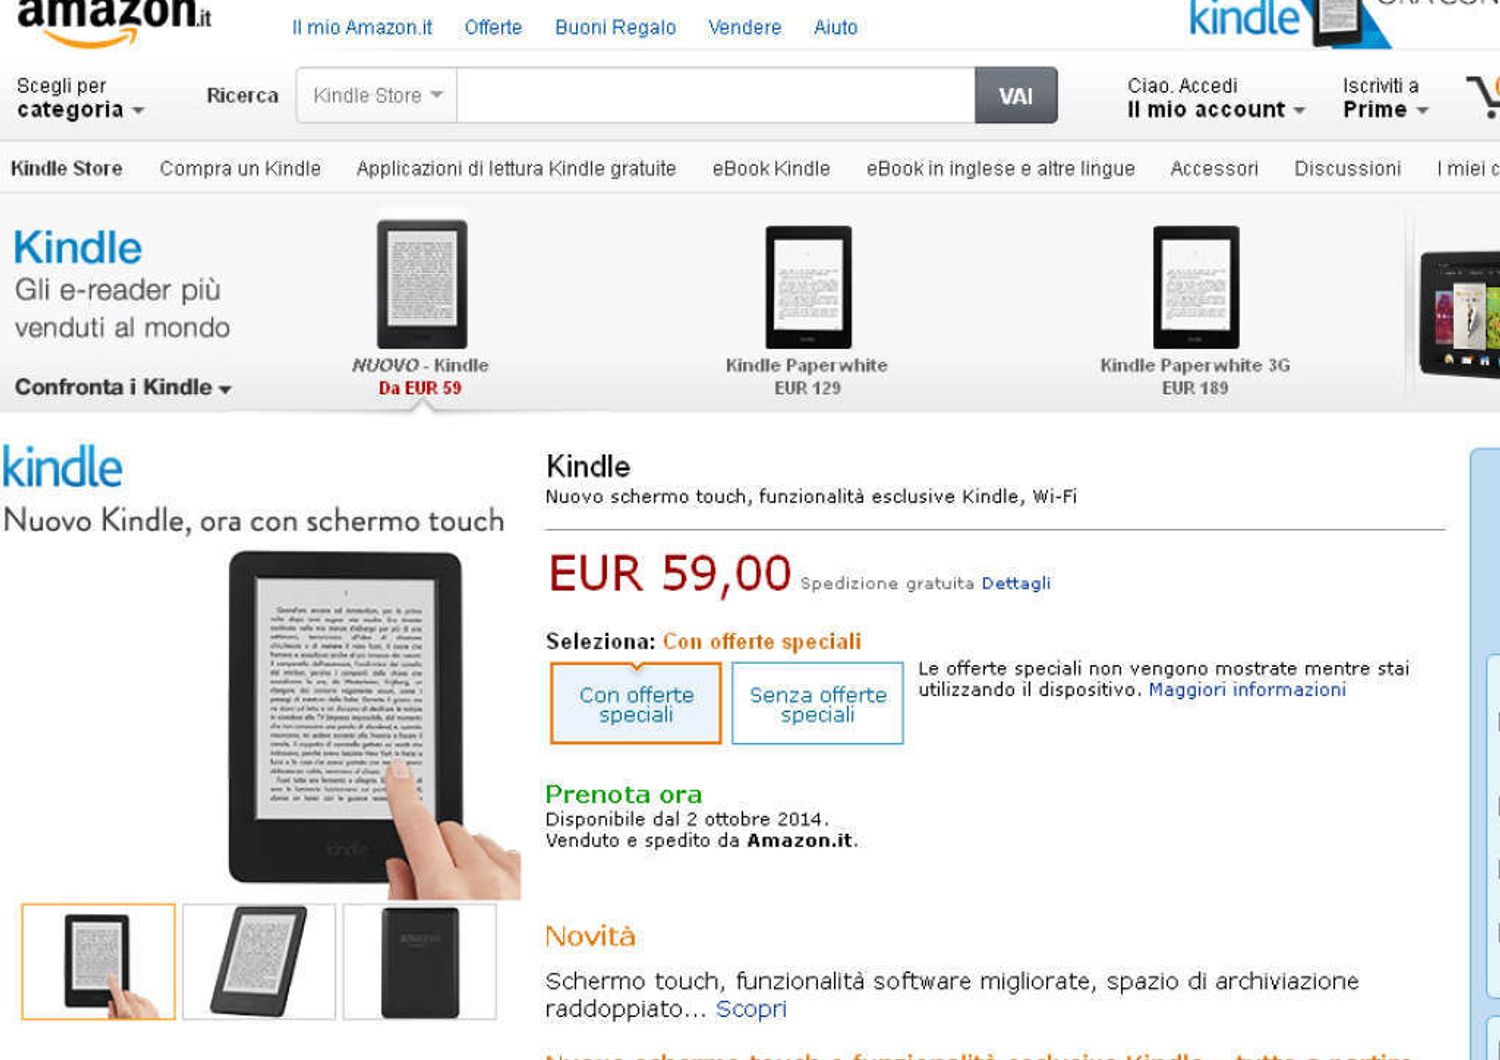 Amazon: svelati i nuovi Kindle, stessi prezzi, piu' performance